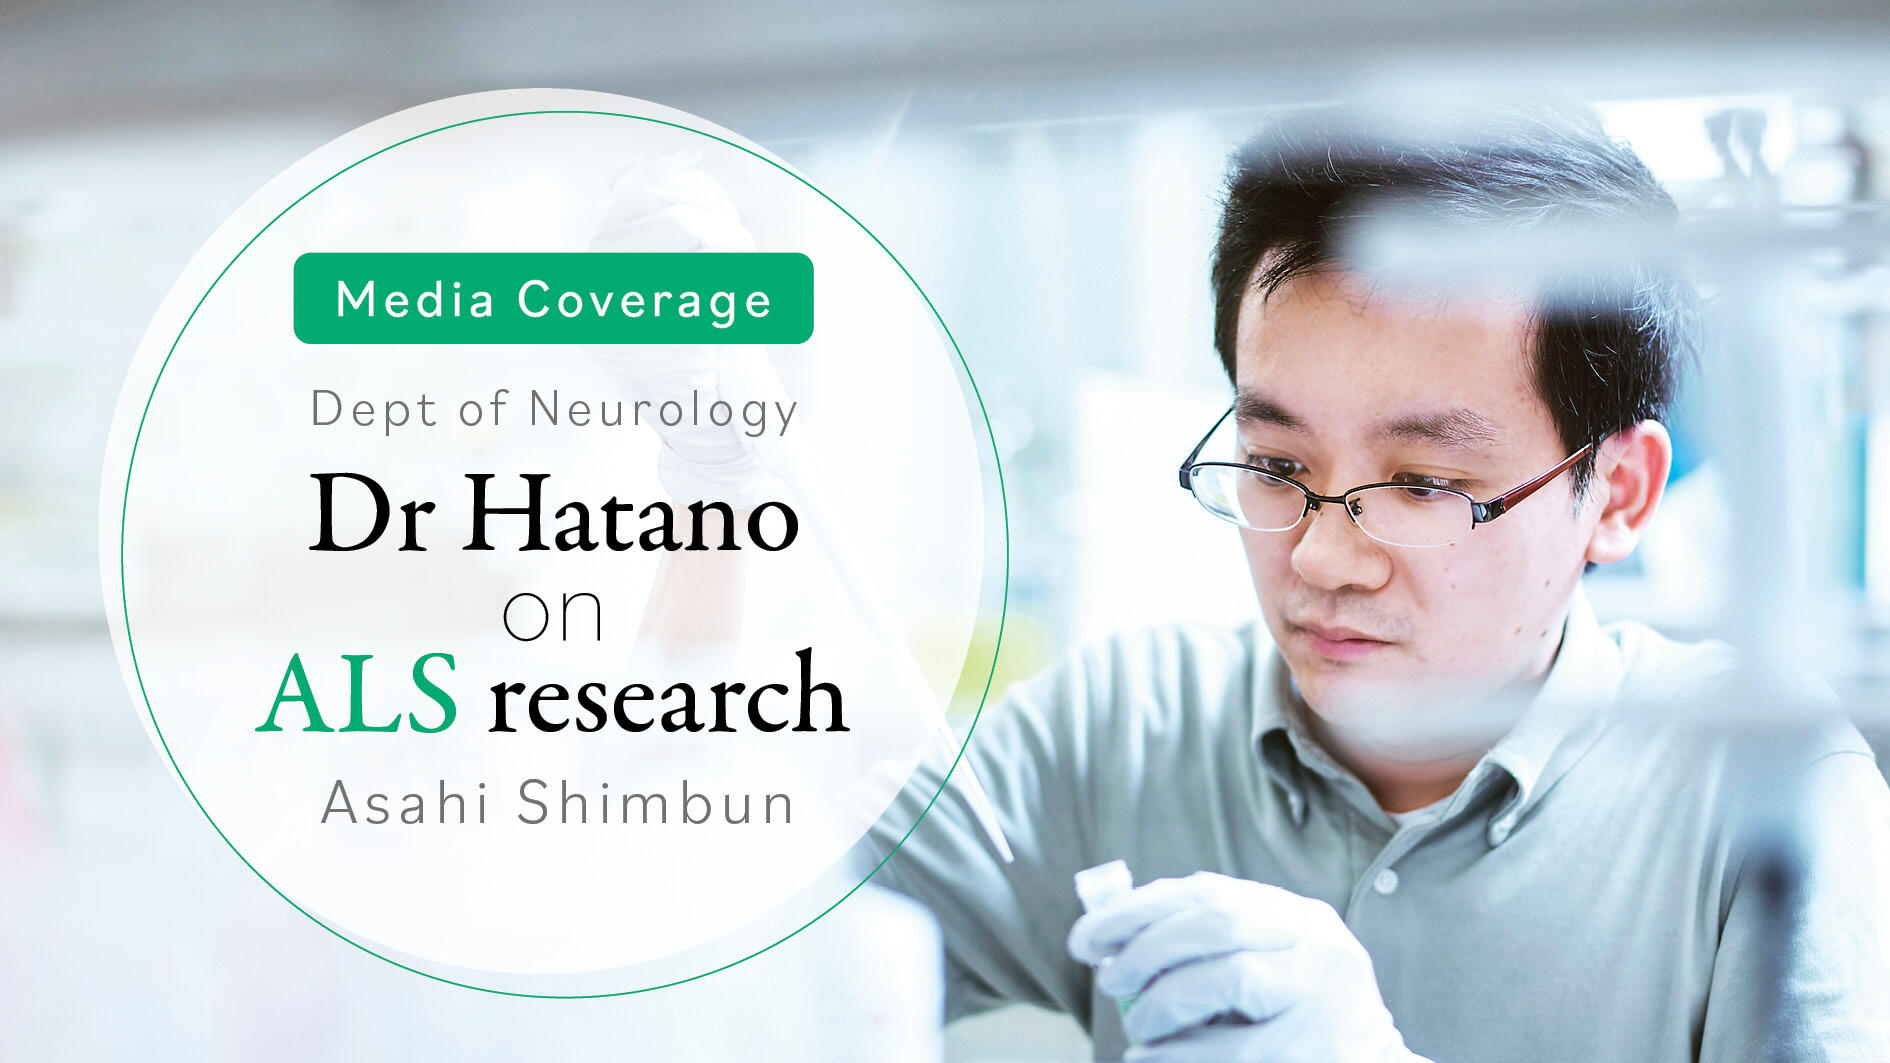 Media Coverage: Dr Hatano on ALS research - Asahi Shimbun